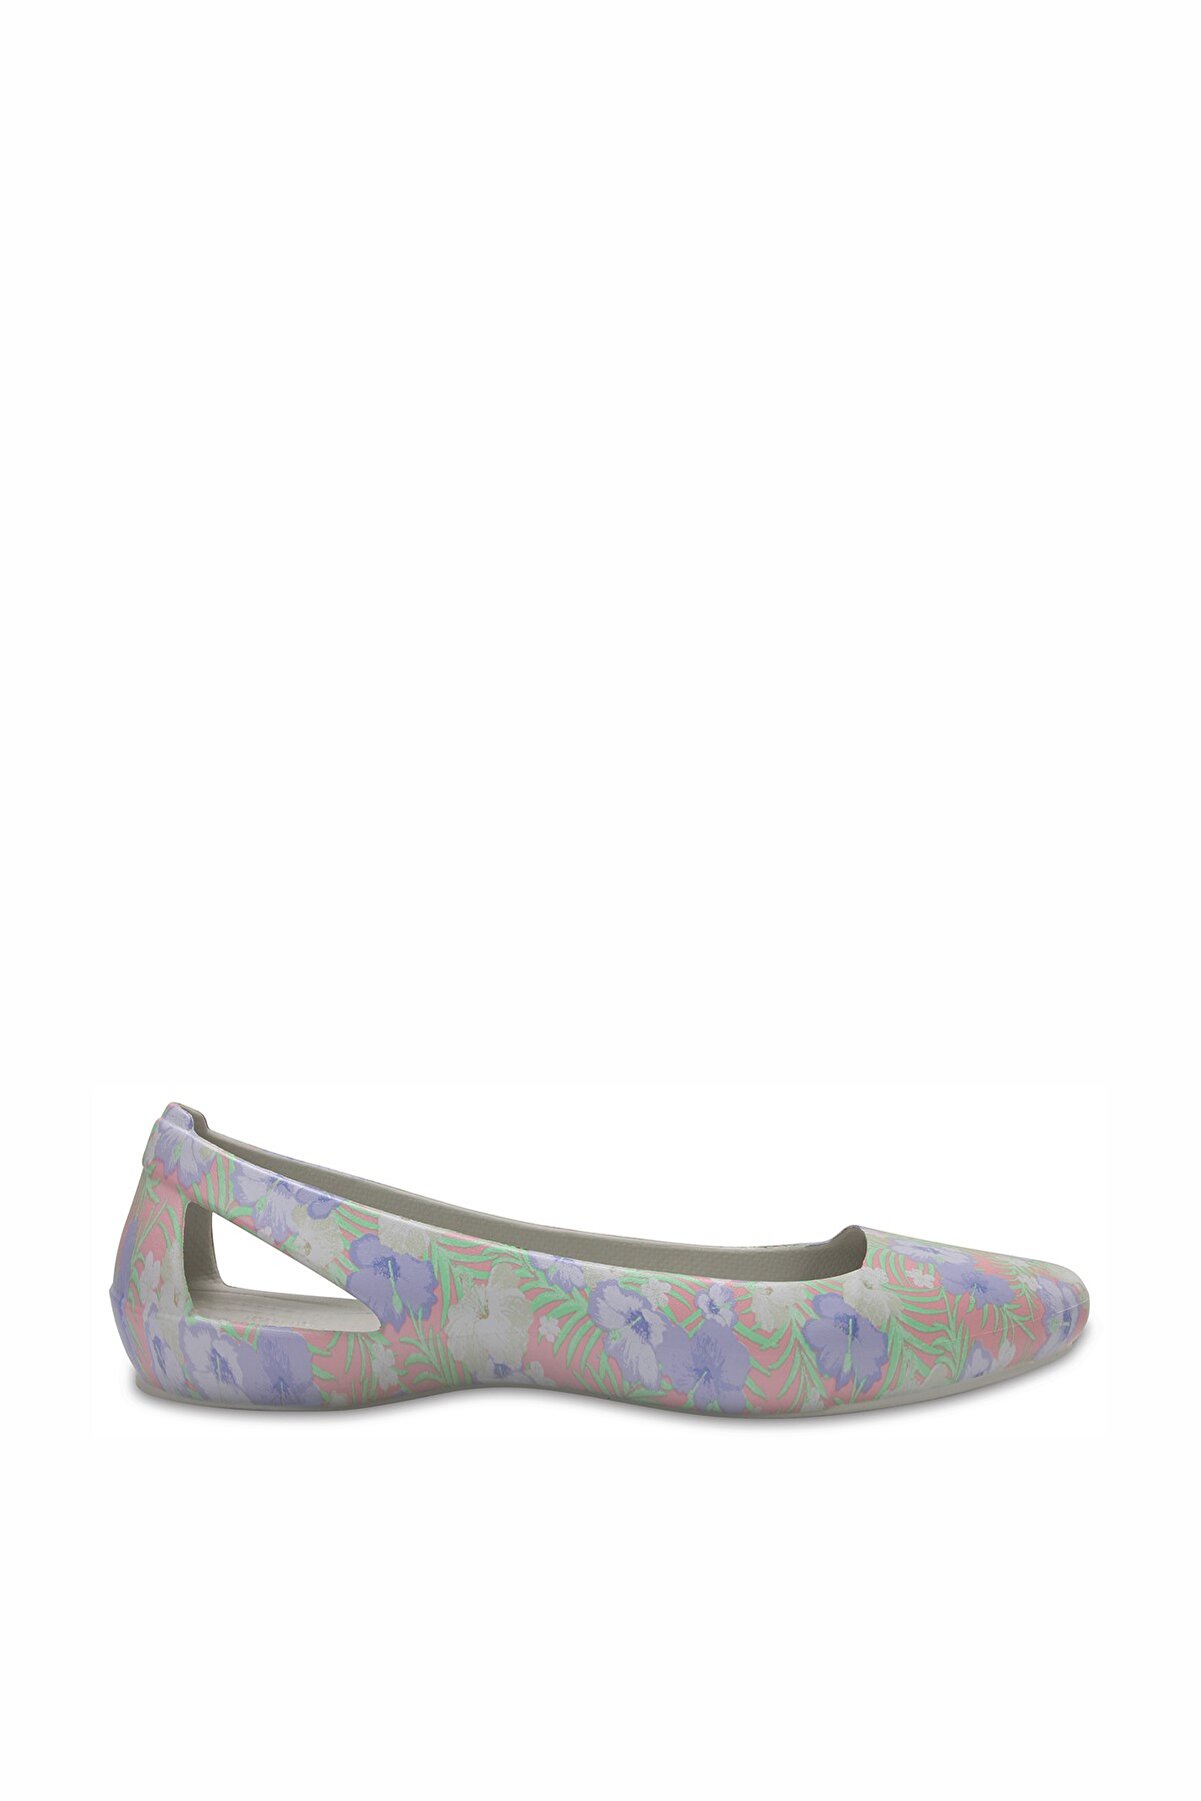 Crocs Açık Pembe Kadın Sienna Graphic Flat Sandalet 204593